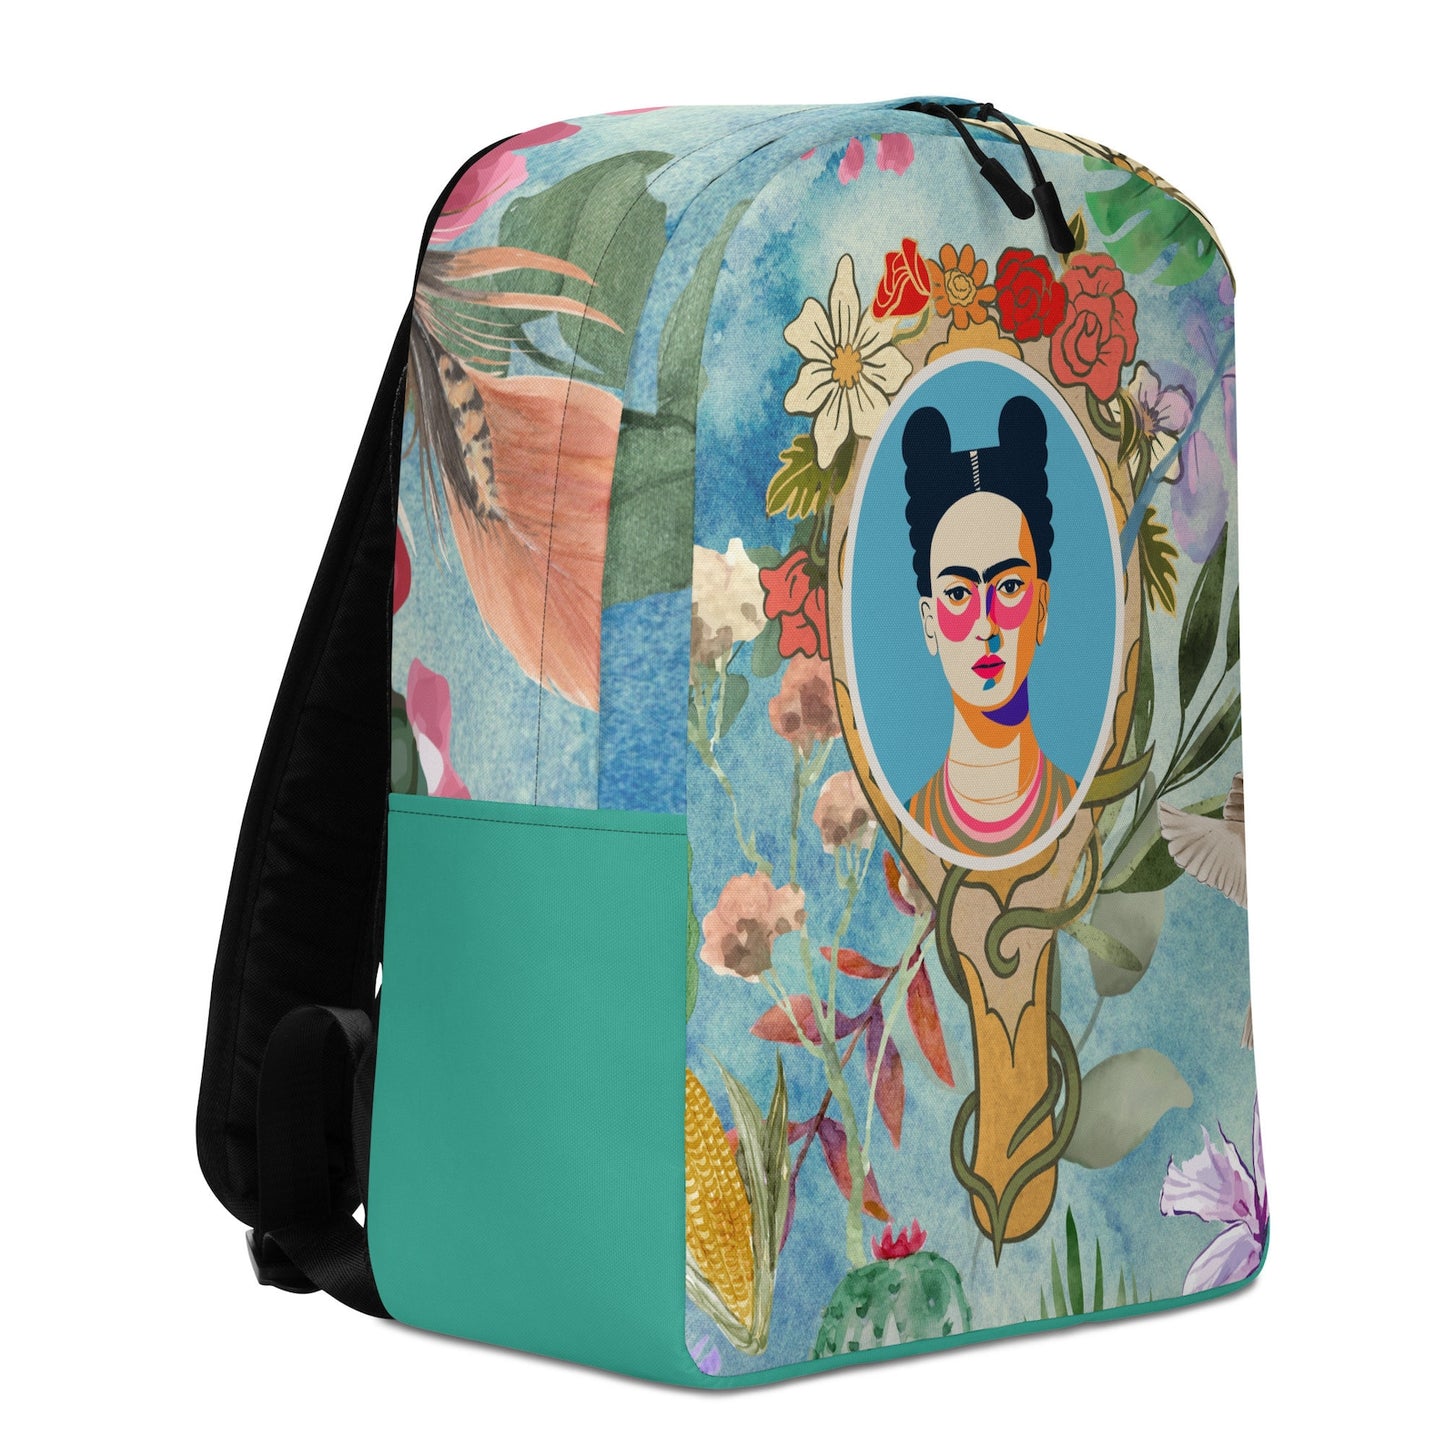 Frida Kahlo aquarela - Backpack